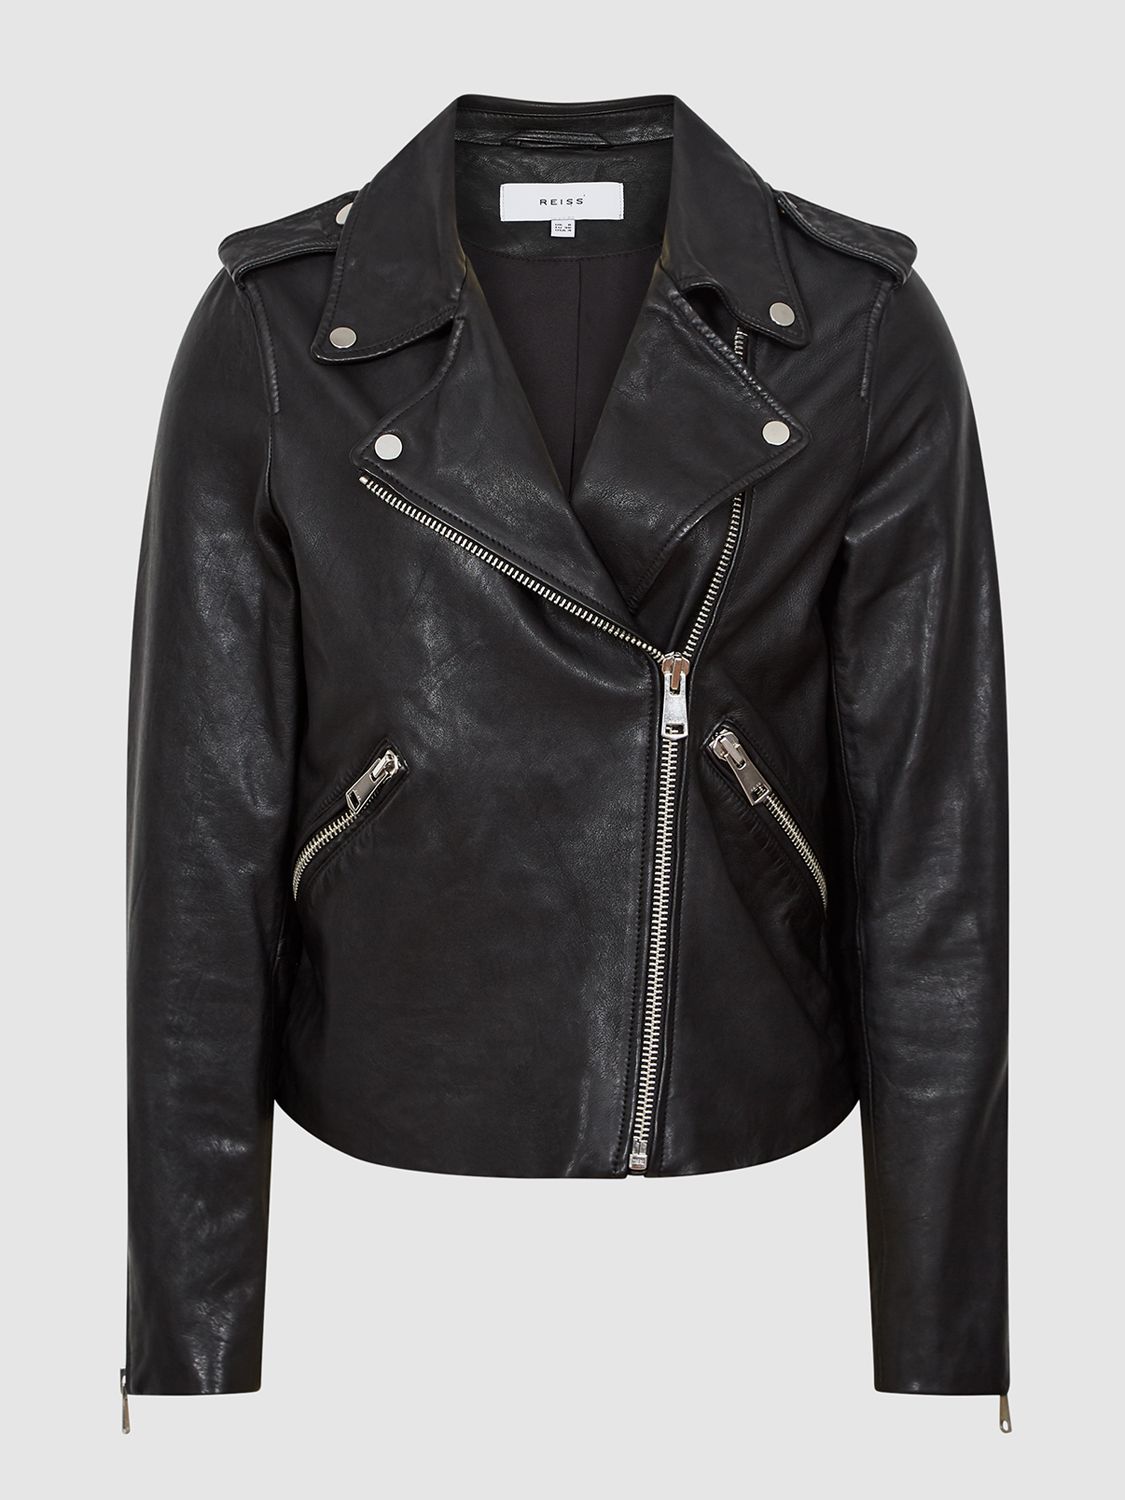 Reiss Gigi Leather Biker Jacket, Black at John Lewis & Partners